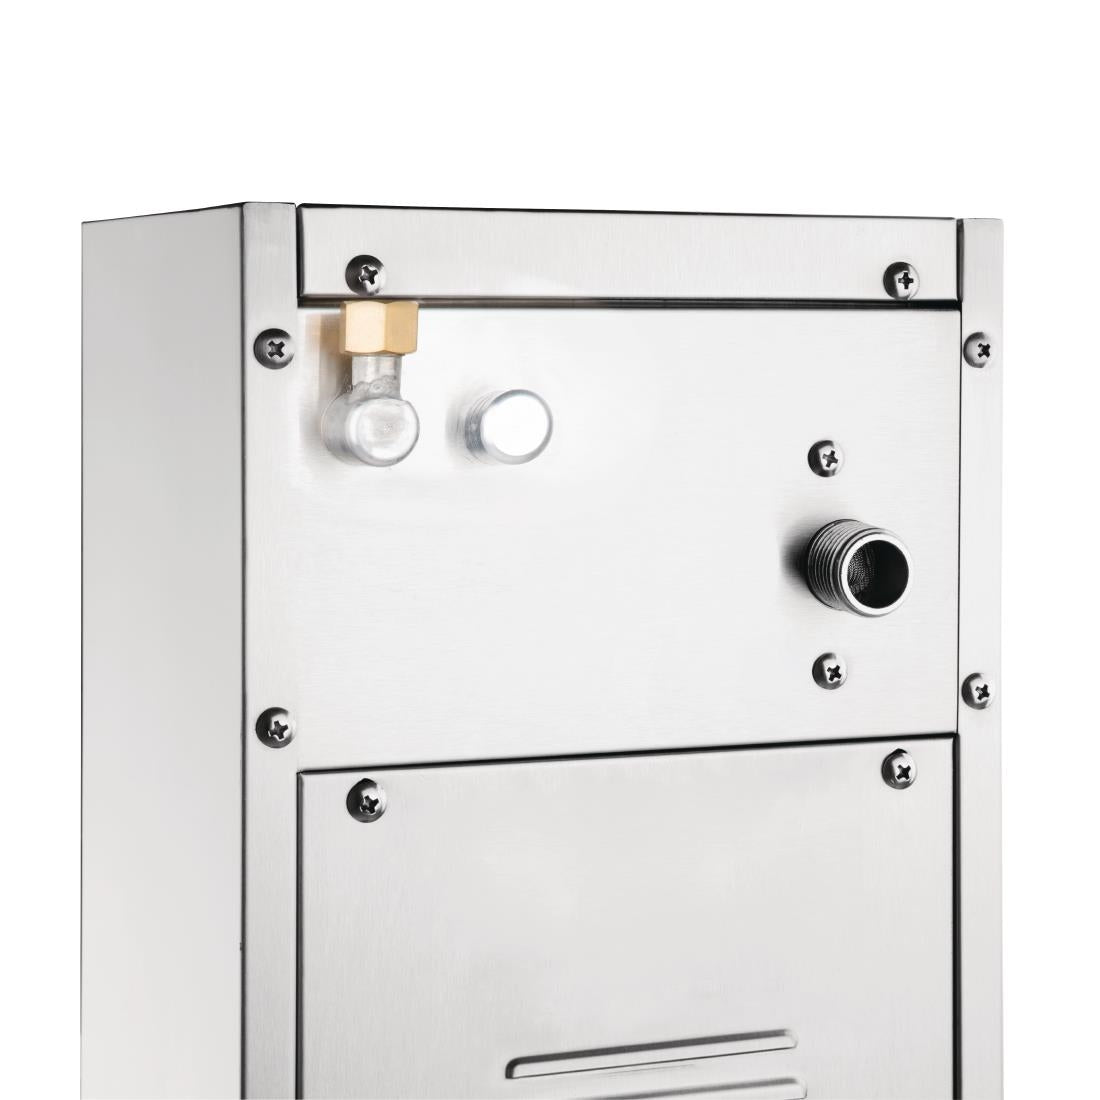 DF524 Nisbets Essentials Auto Fill Water Boiler 8Ltr JD Catering Equipment Solutions Ltd